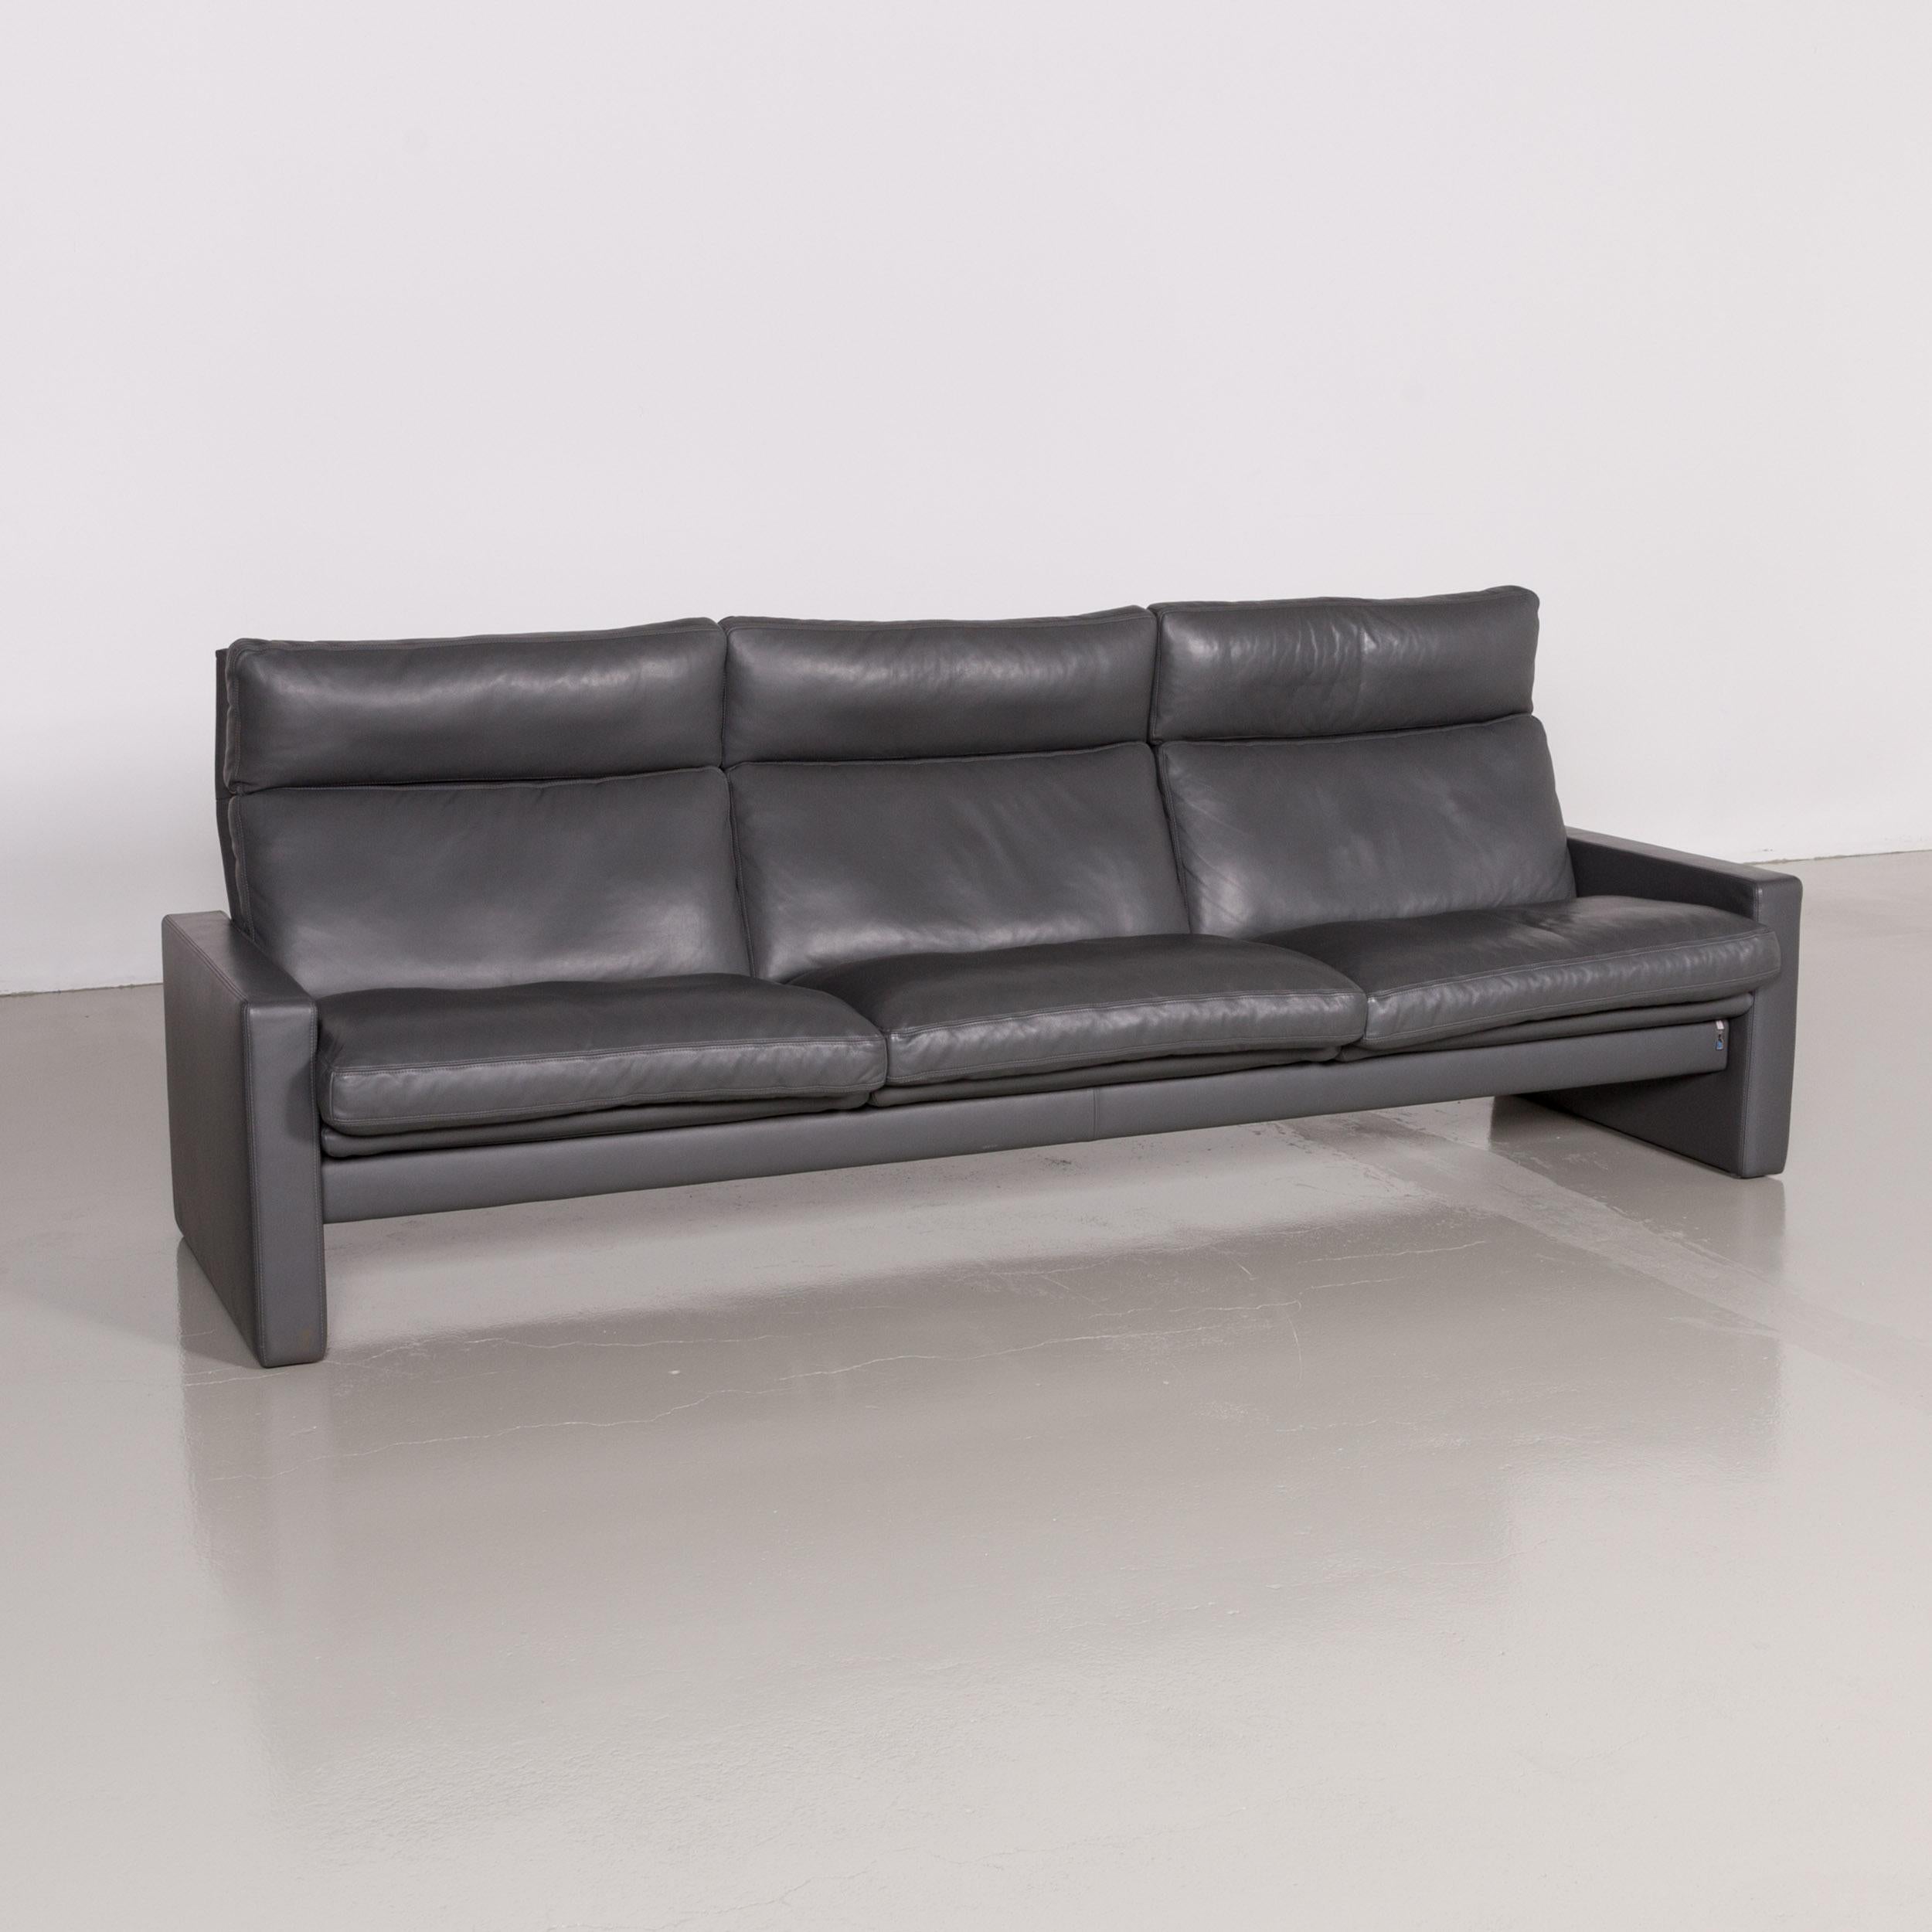 Erpo Manhattan designer leather sofa in anthracite grey three-seat couch.